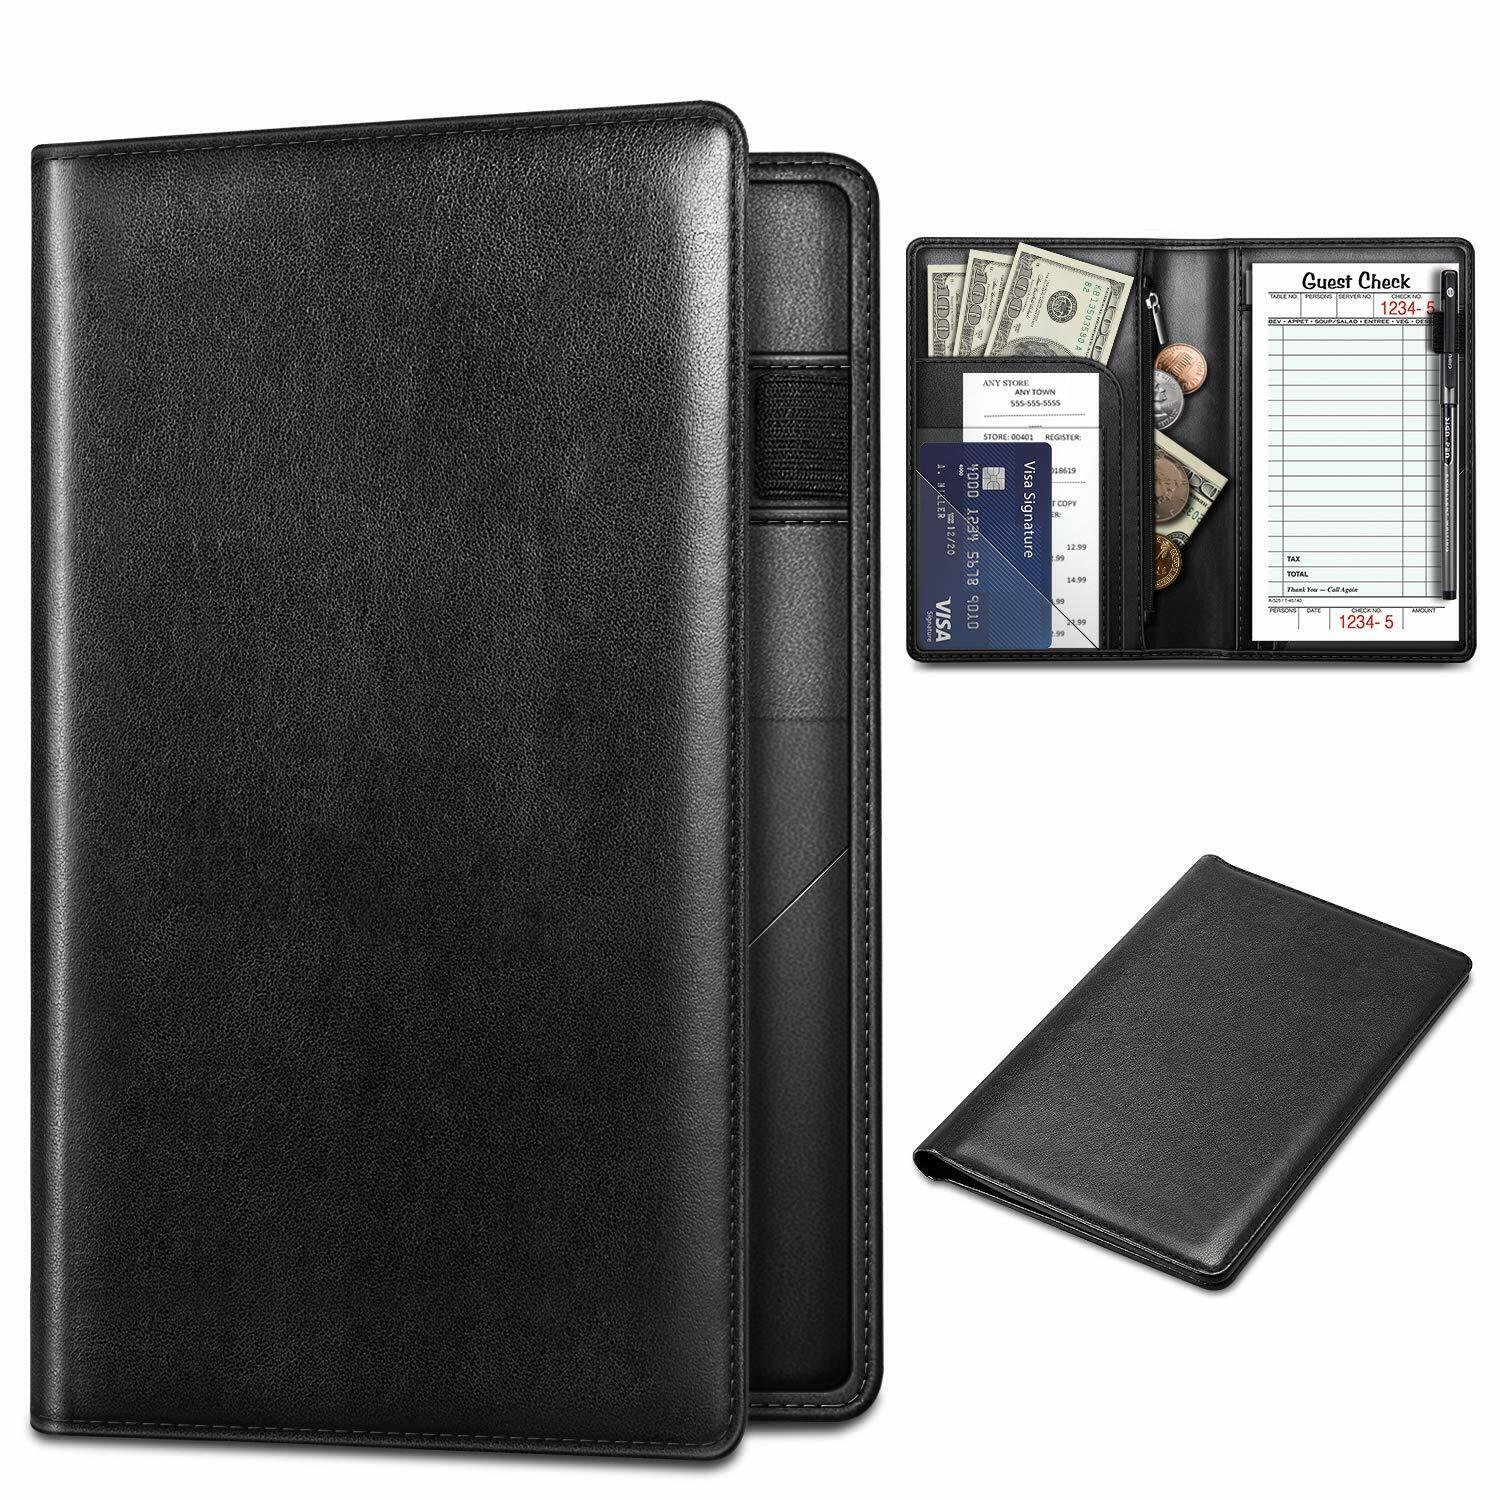 Server Book for Waitress Waiter Organizer Wallet with Zipper Pocket Card Holder